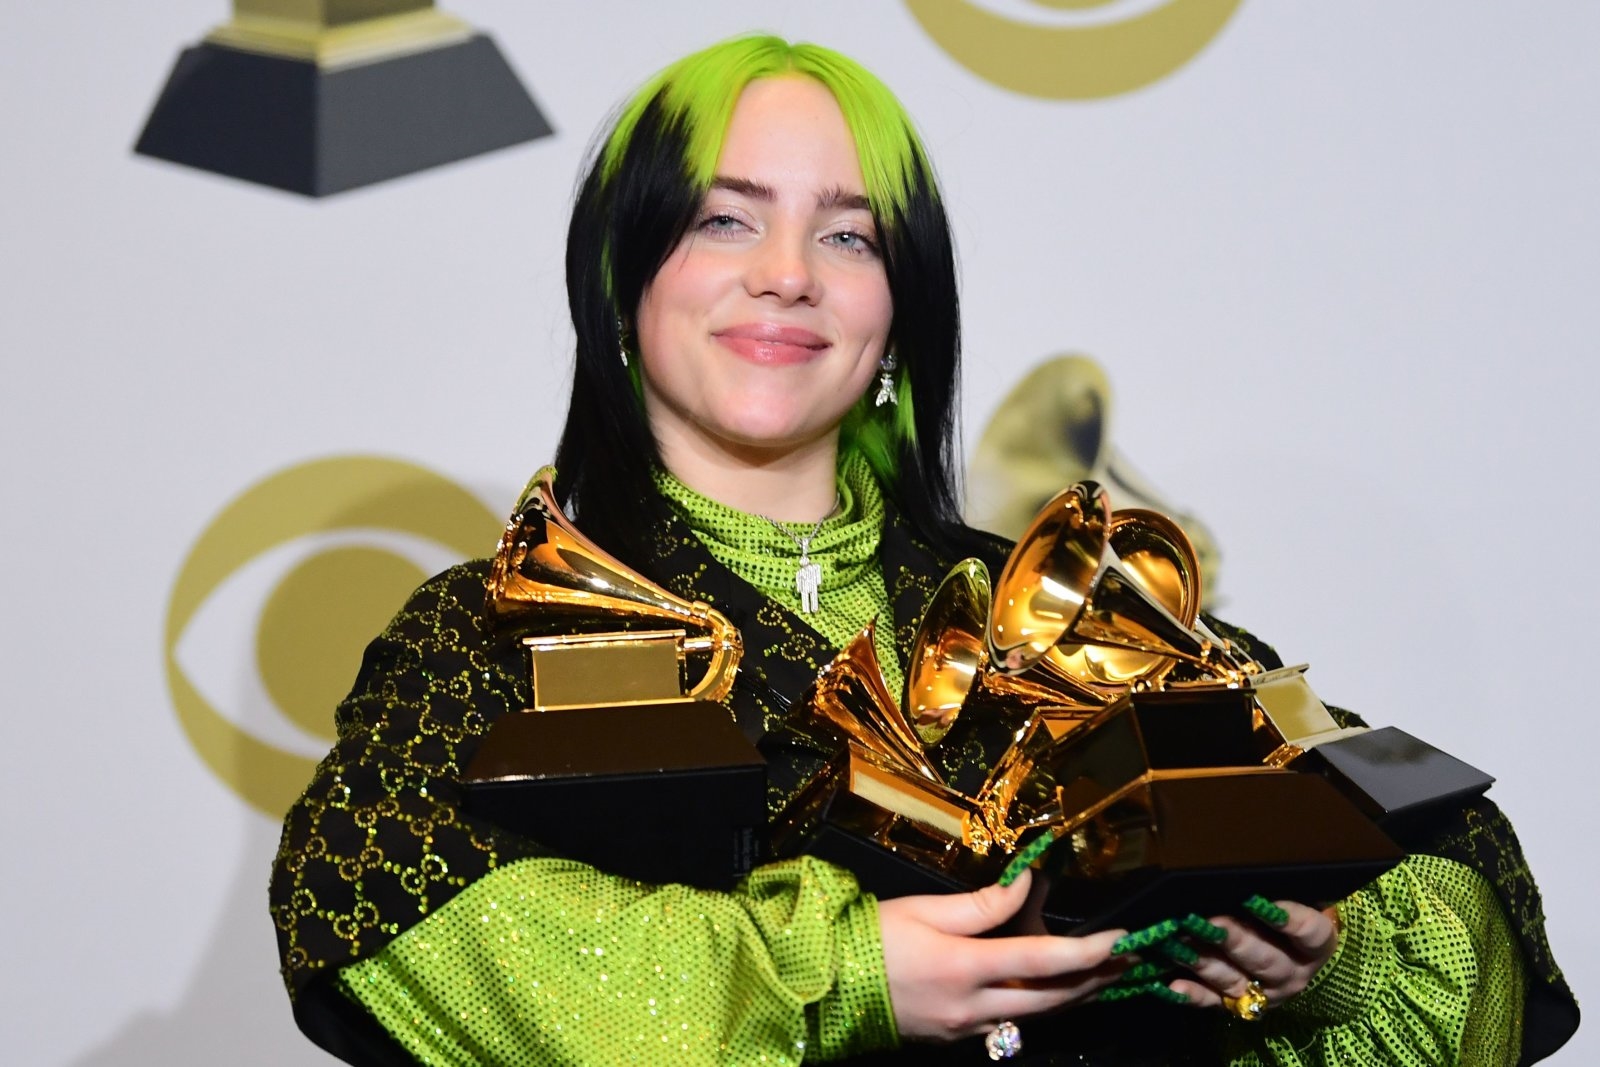 Billie Eilish proved anyone can access Grammy-winning gear | DeviceDaily.com